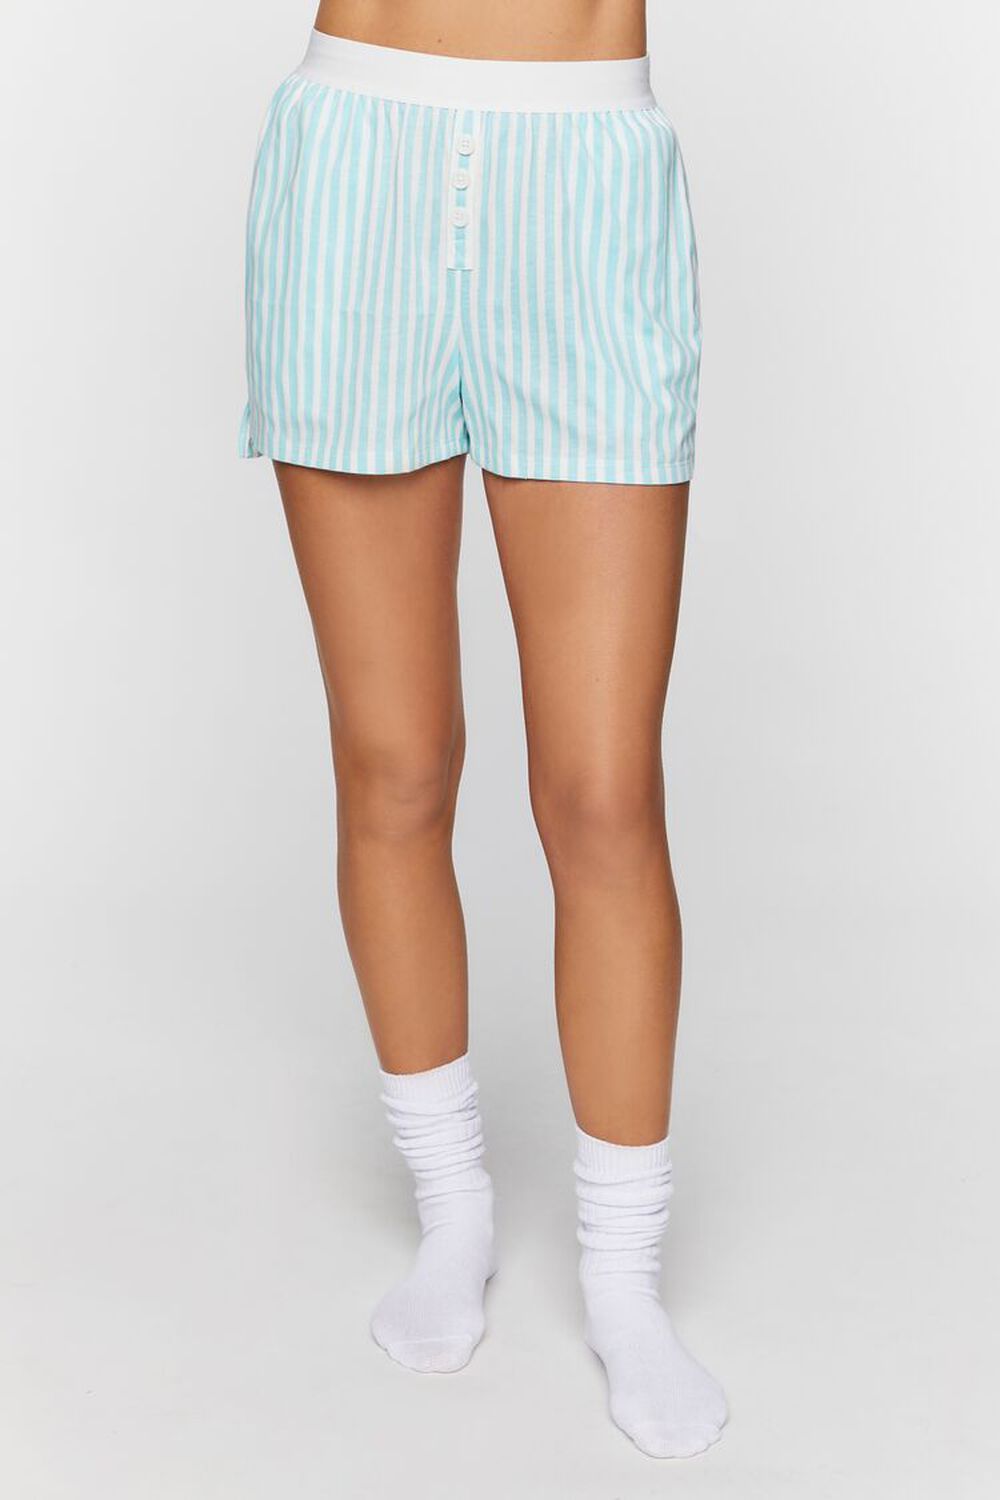 POWDER BLUE/WHITE Striped Button-Front Pajama Shorts, image 2